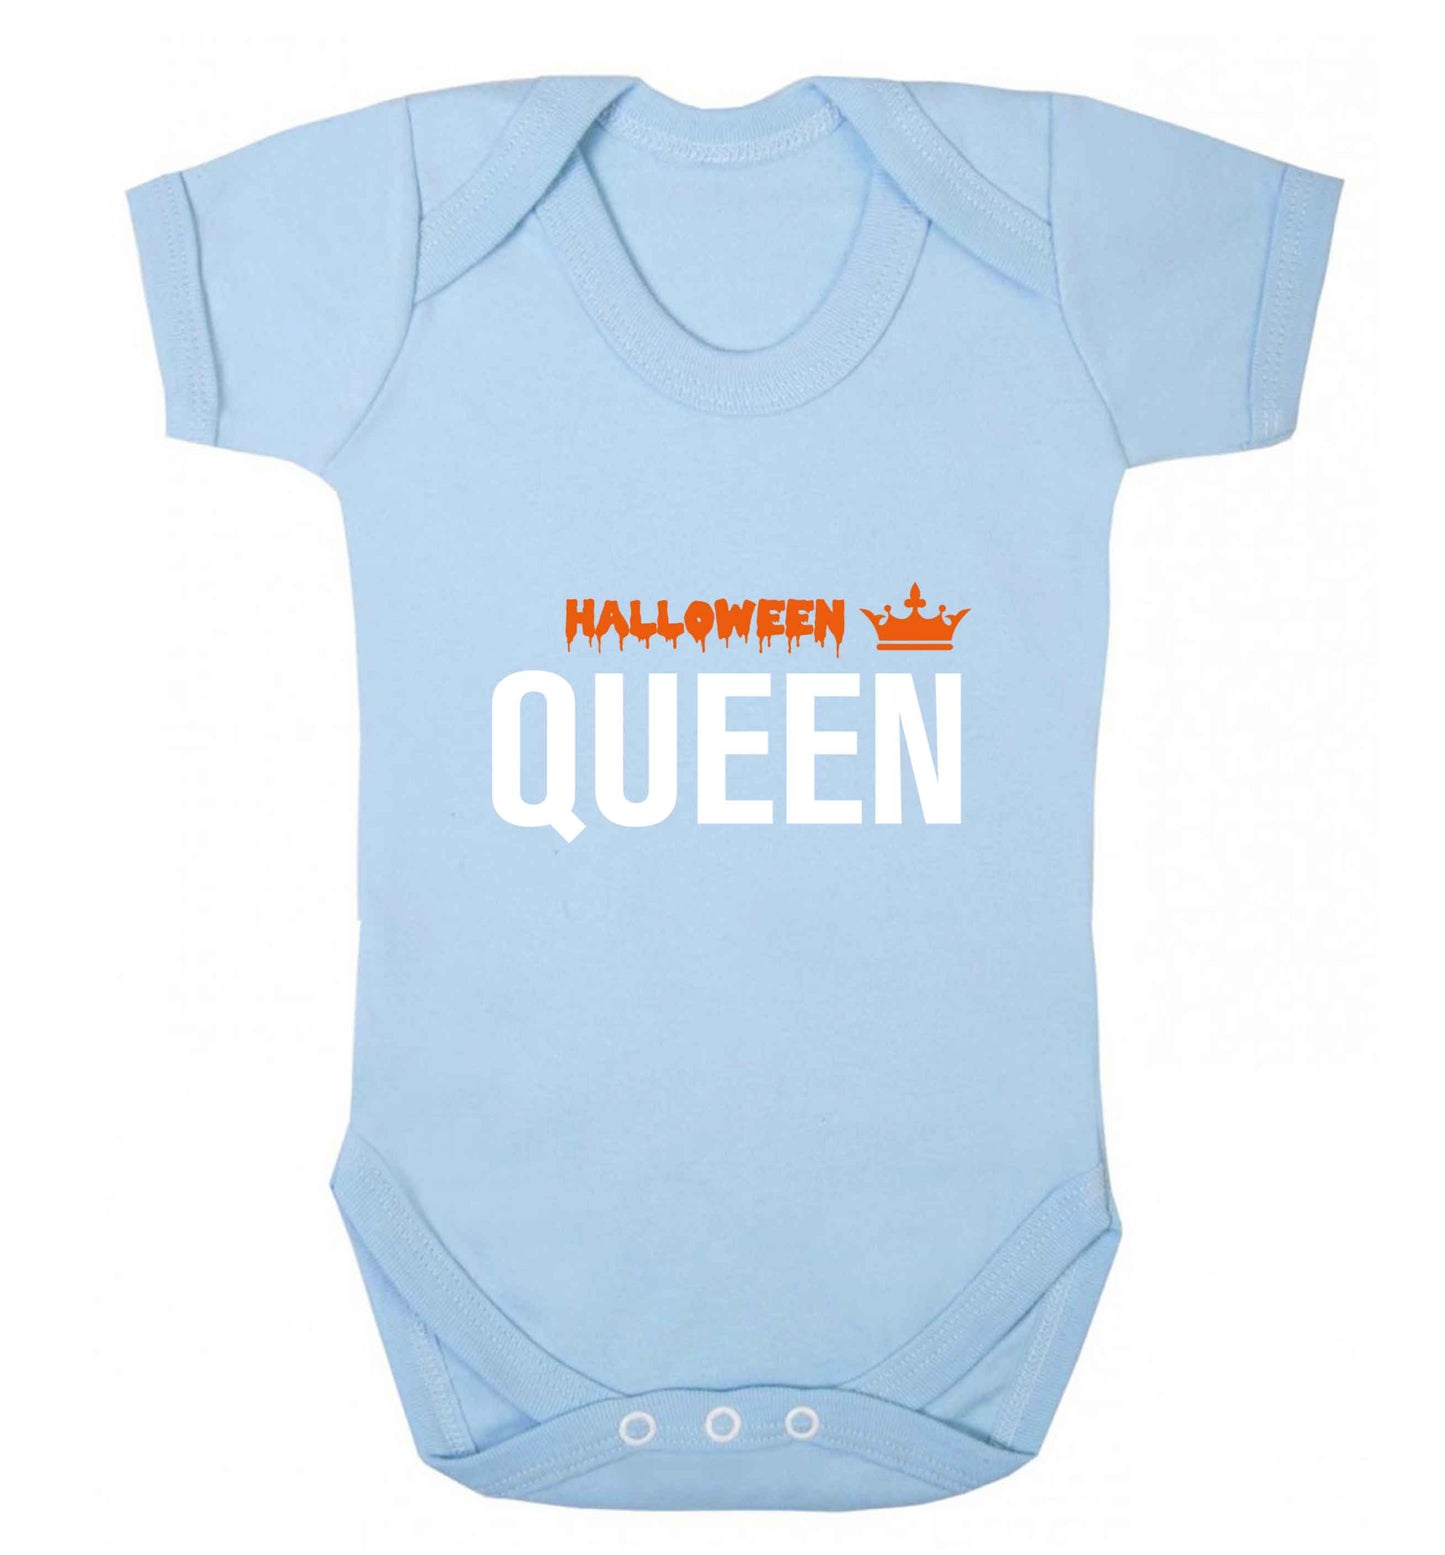 Halloween queen baby vest pale blue 18-24 months